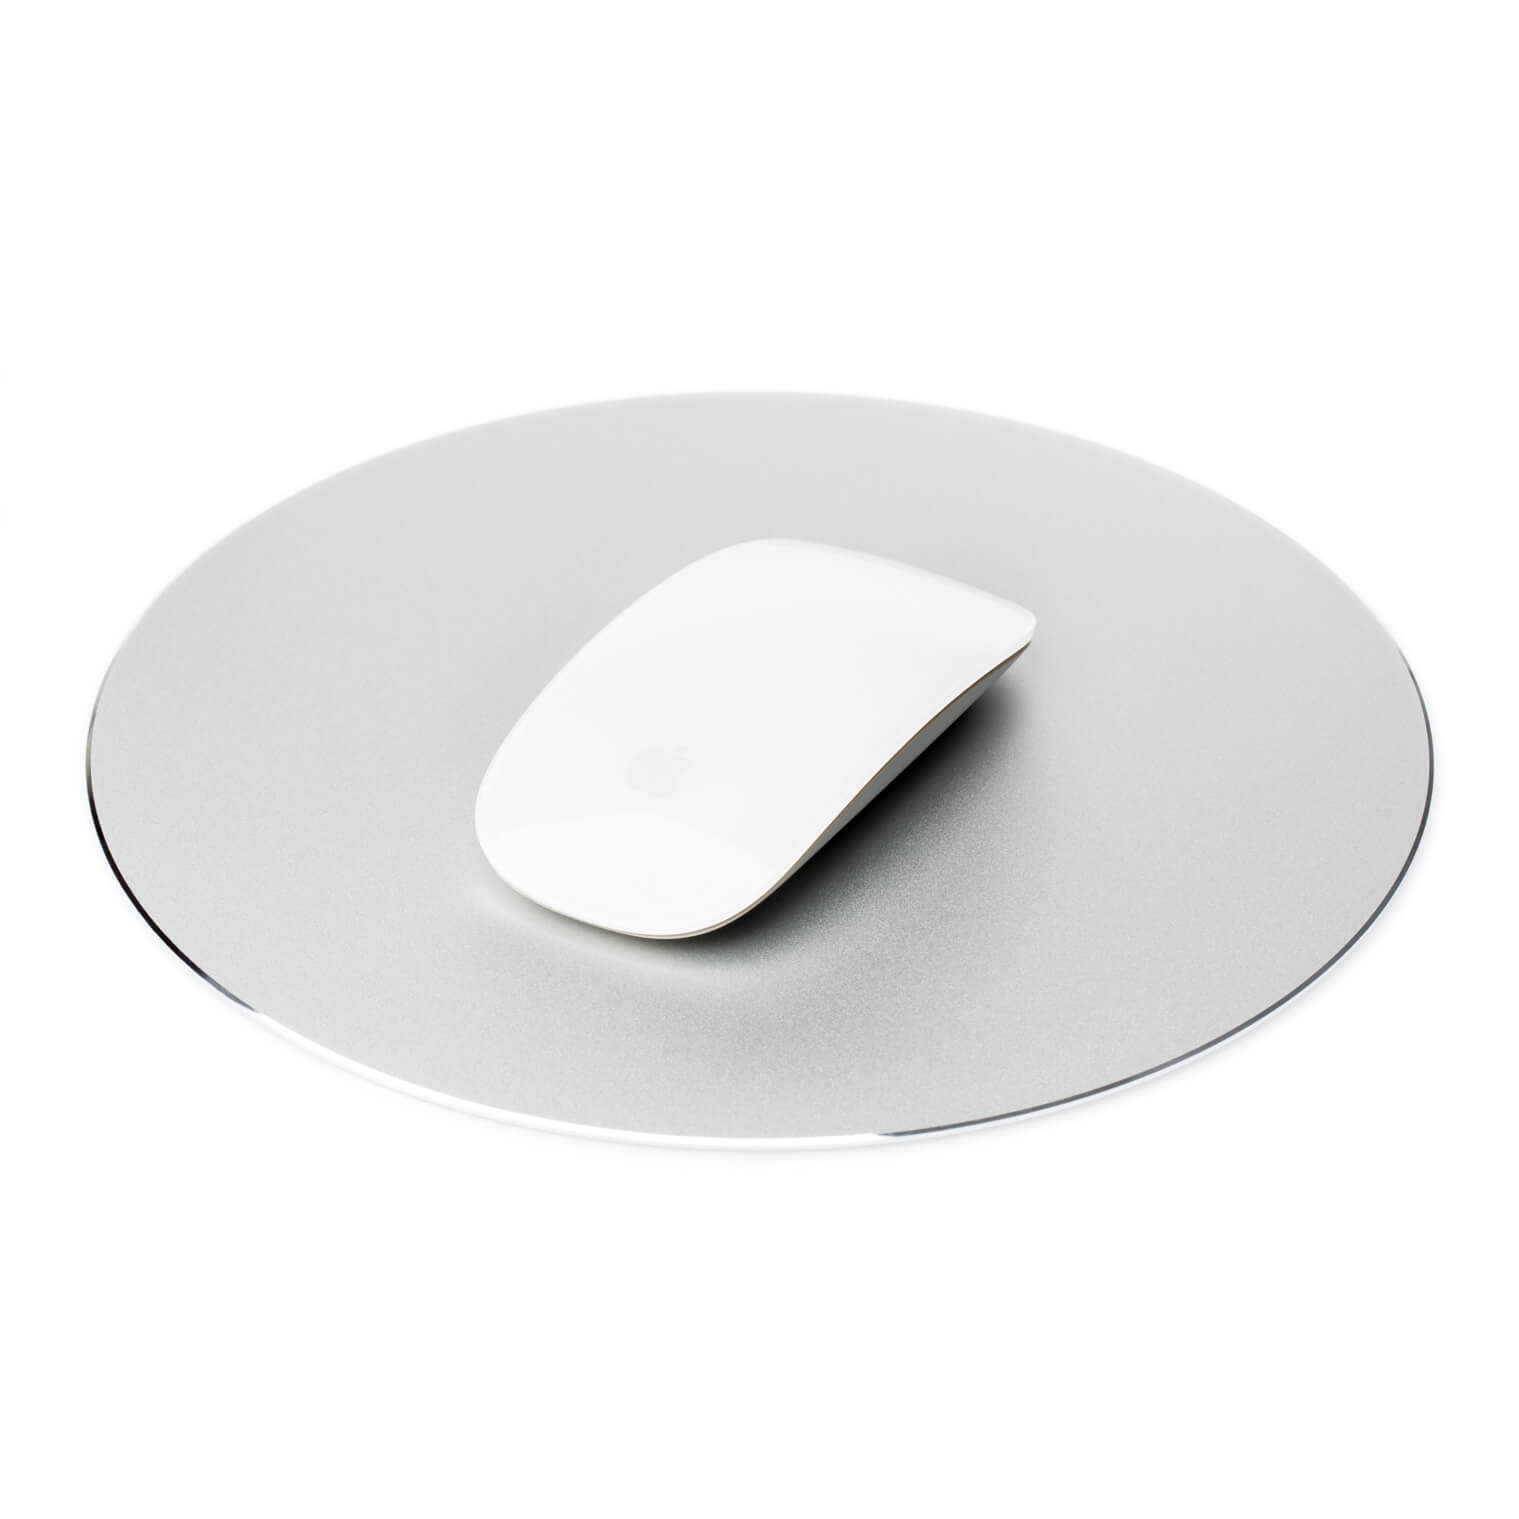 DESIRE2 Aluminium Circular Mouse Pad  Circular Mouse Pad